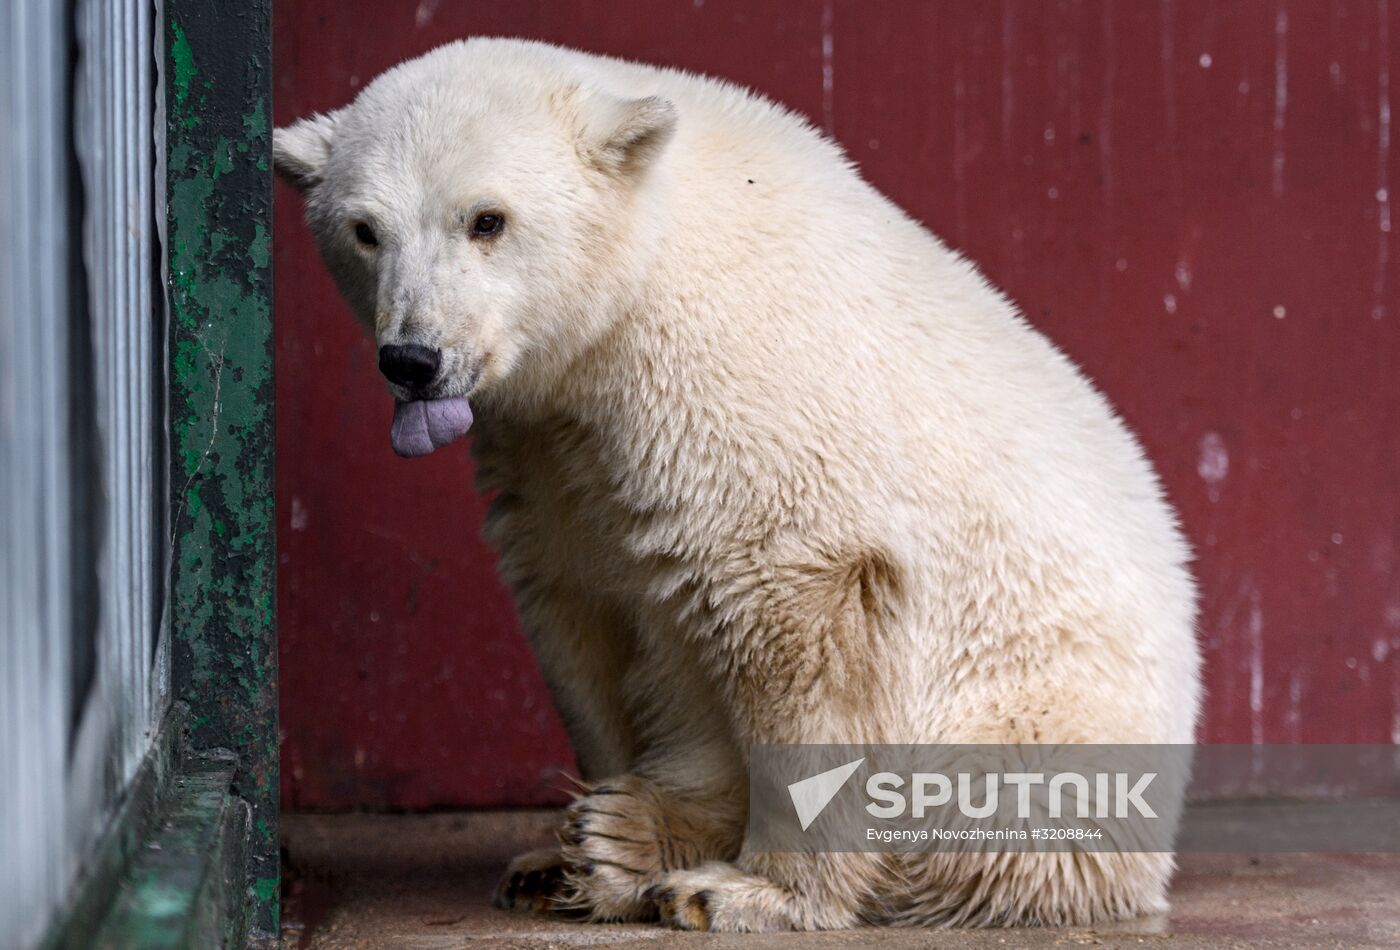 Polar bear cub brought from Yakutia to Moscow Zoo nursery